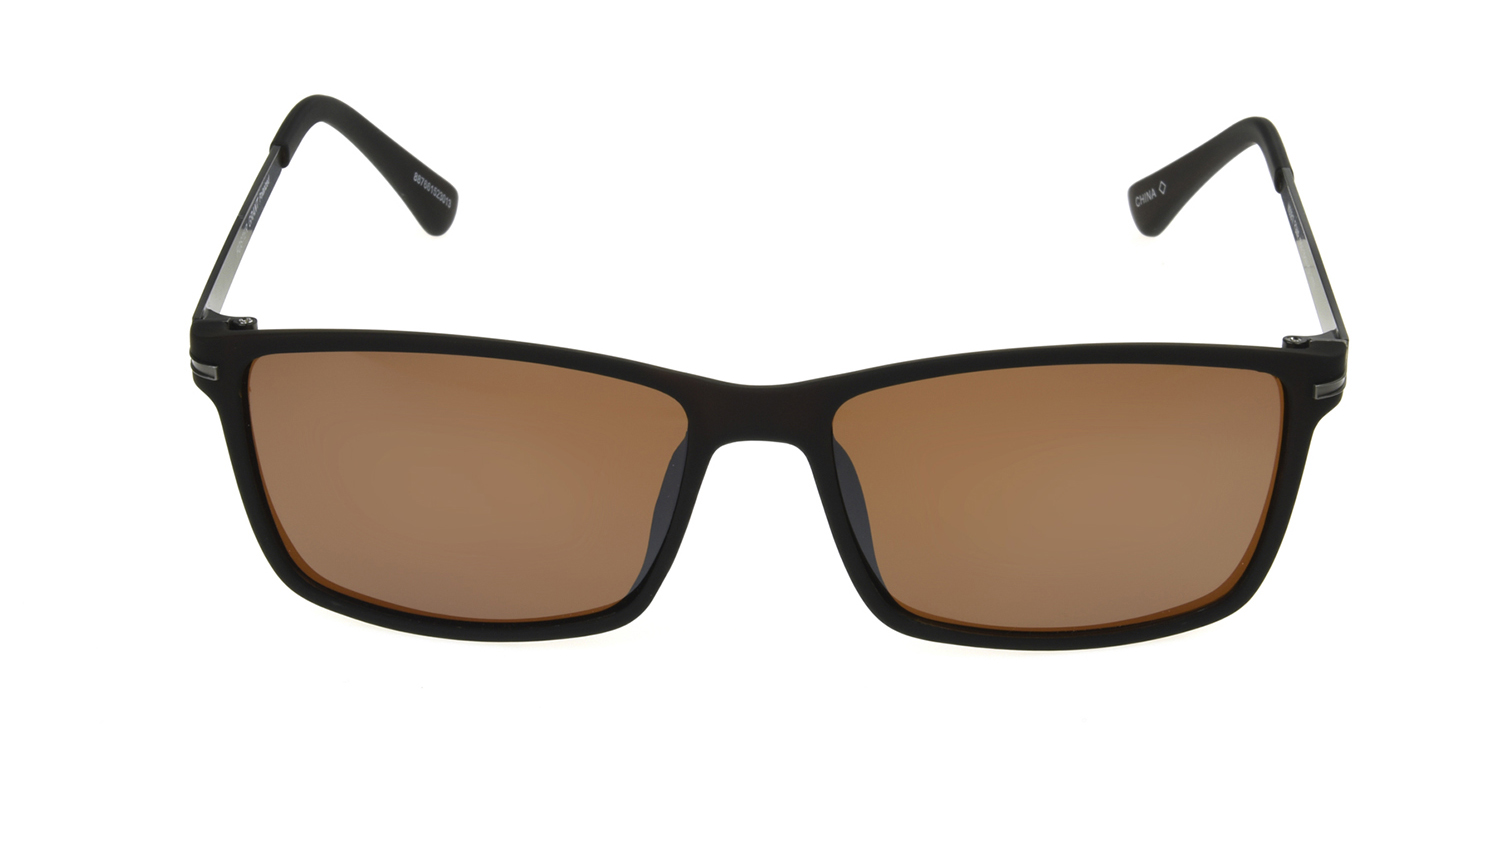 Foster Grant Men's Brown Rectangle Sunglasses GG12 - image 2 of 3